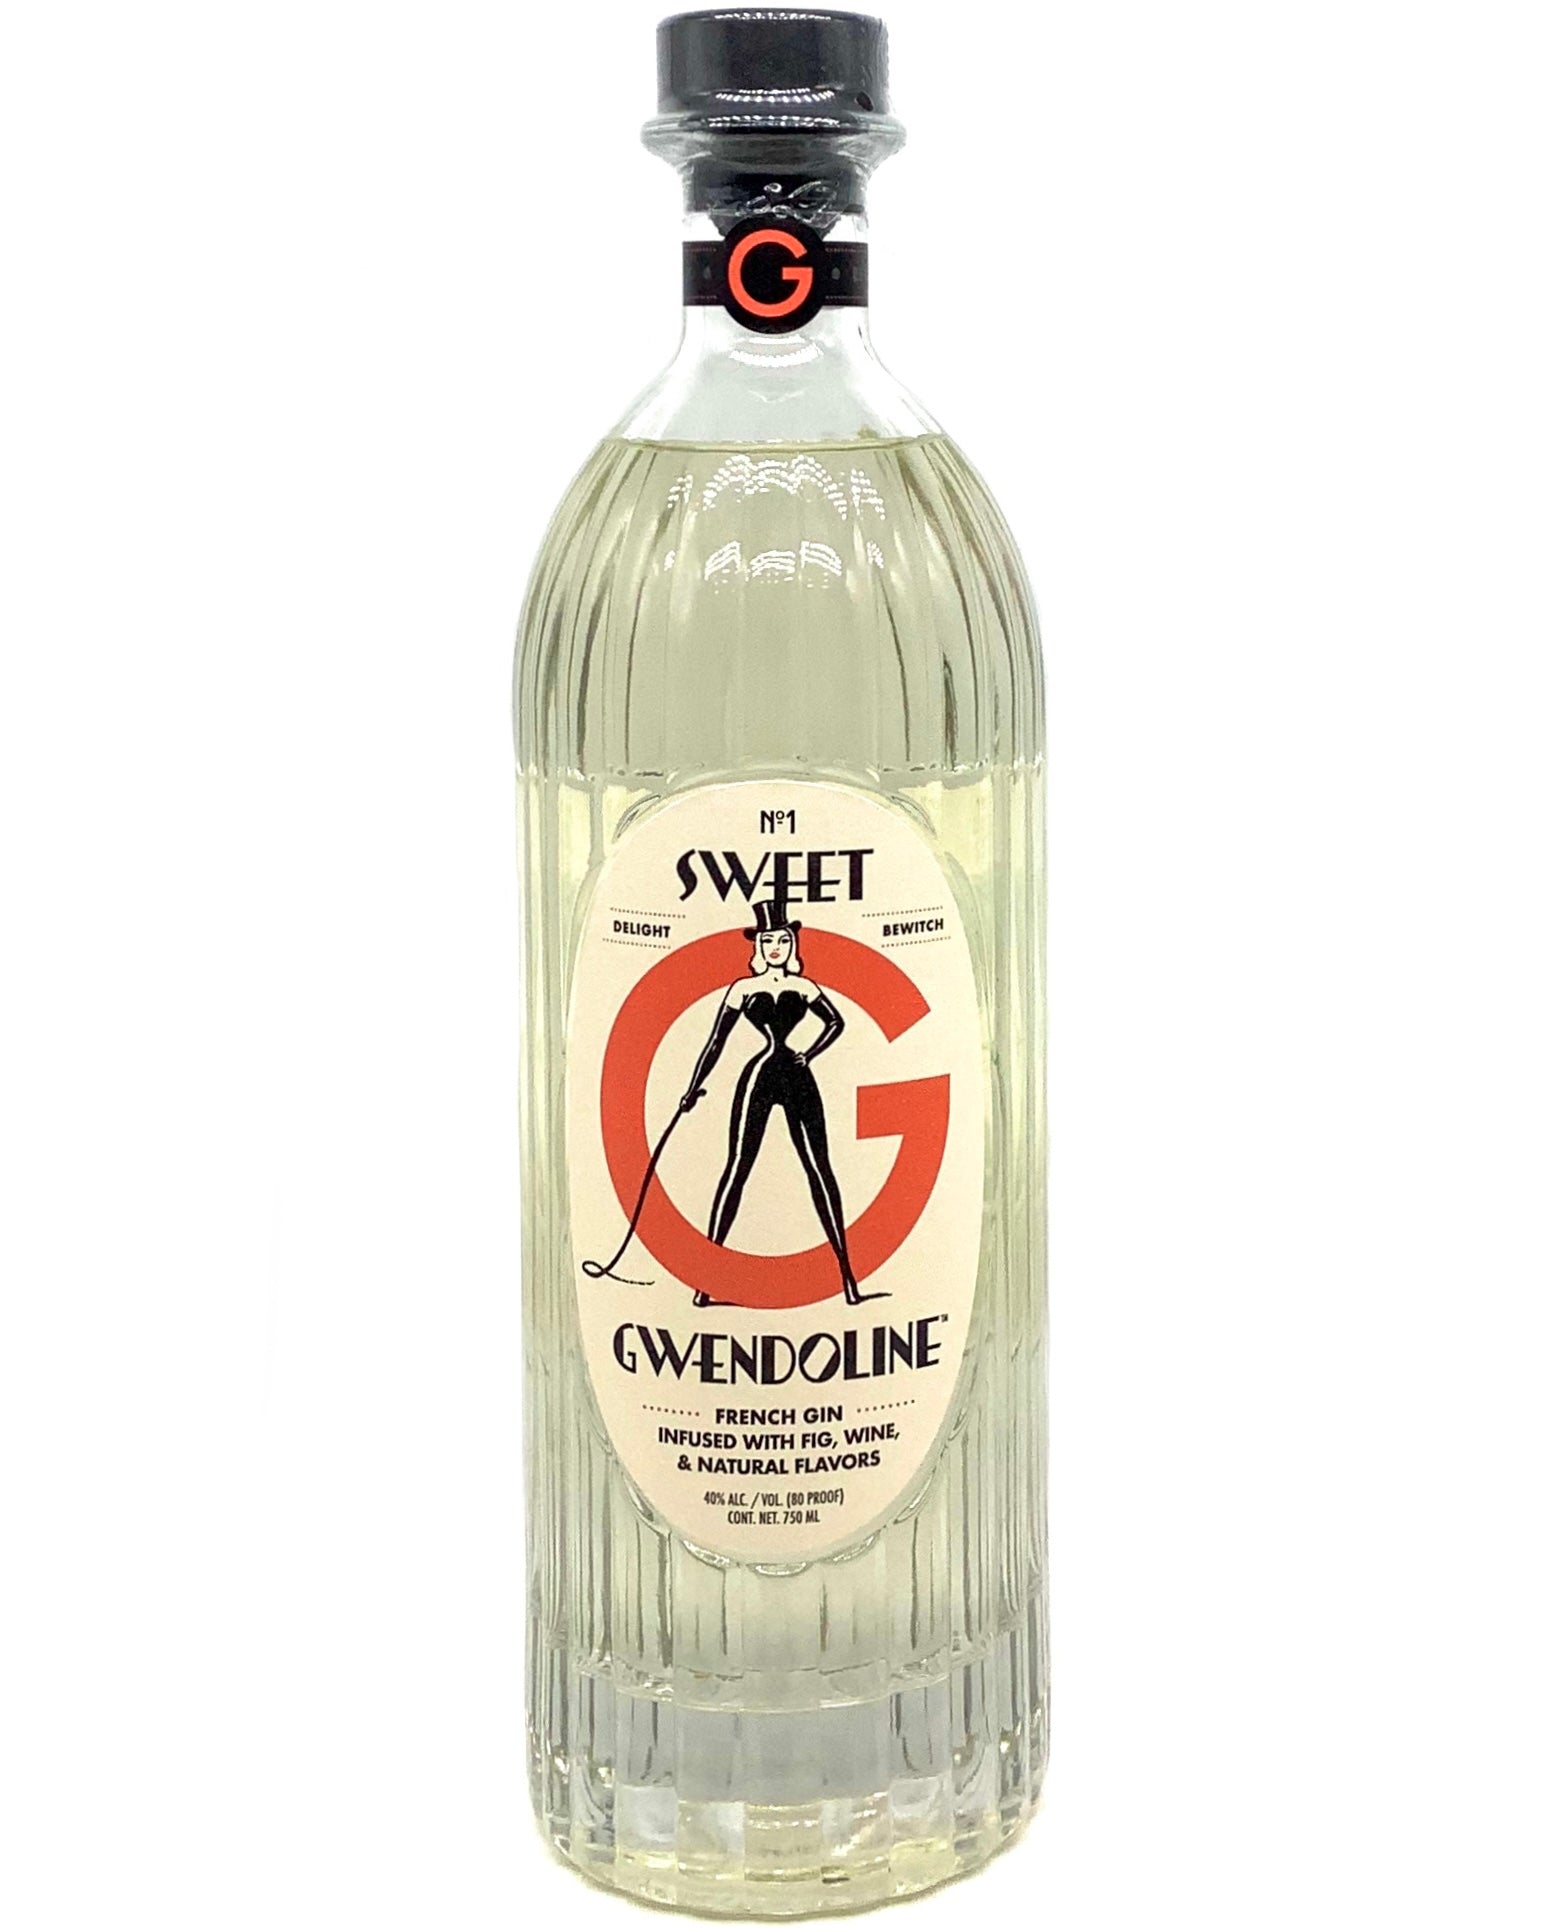 Sweet Gwendoline French Gin 750ml